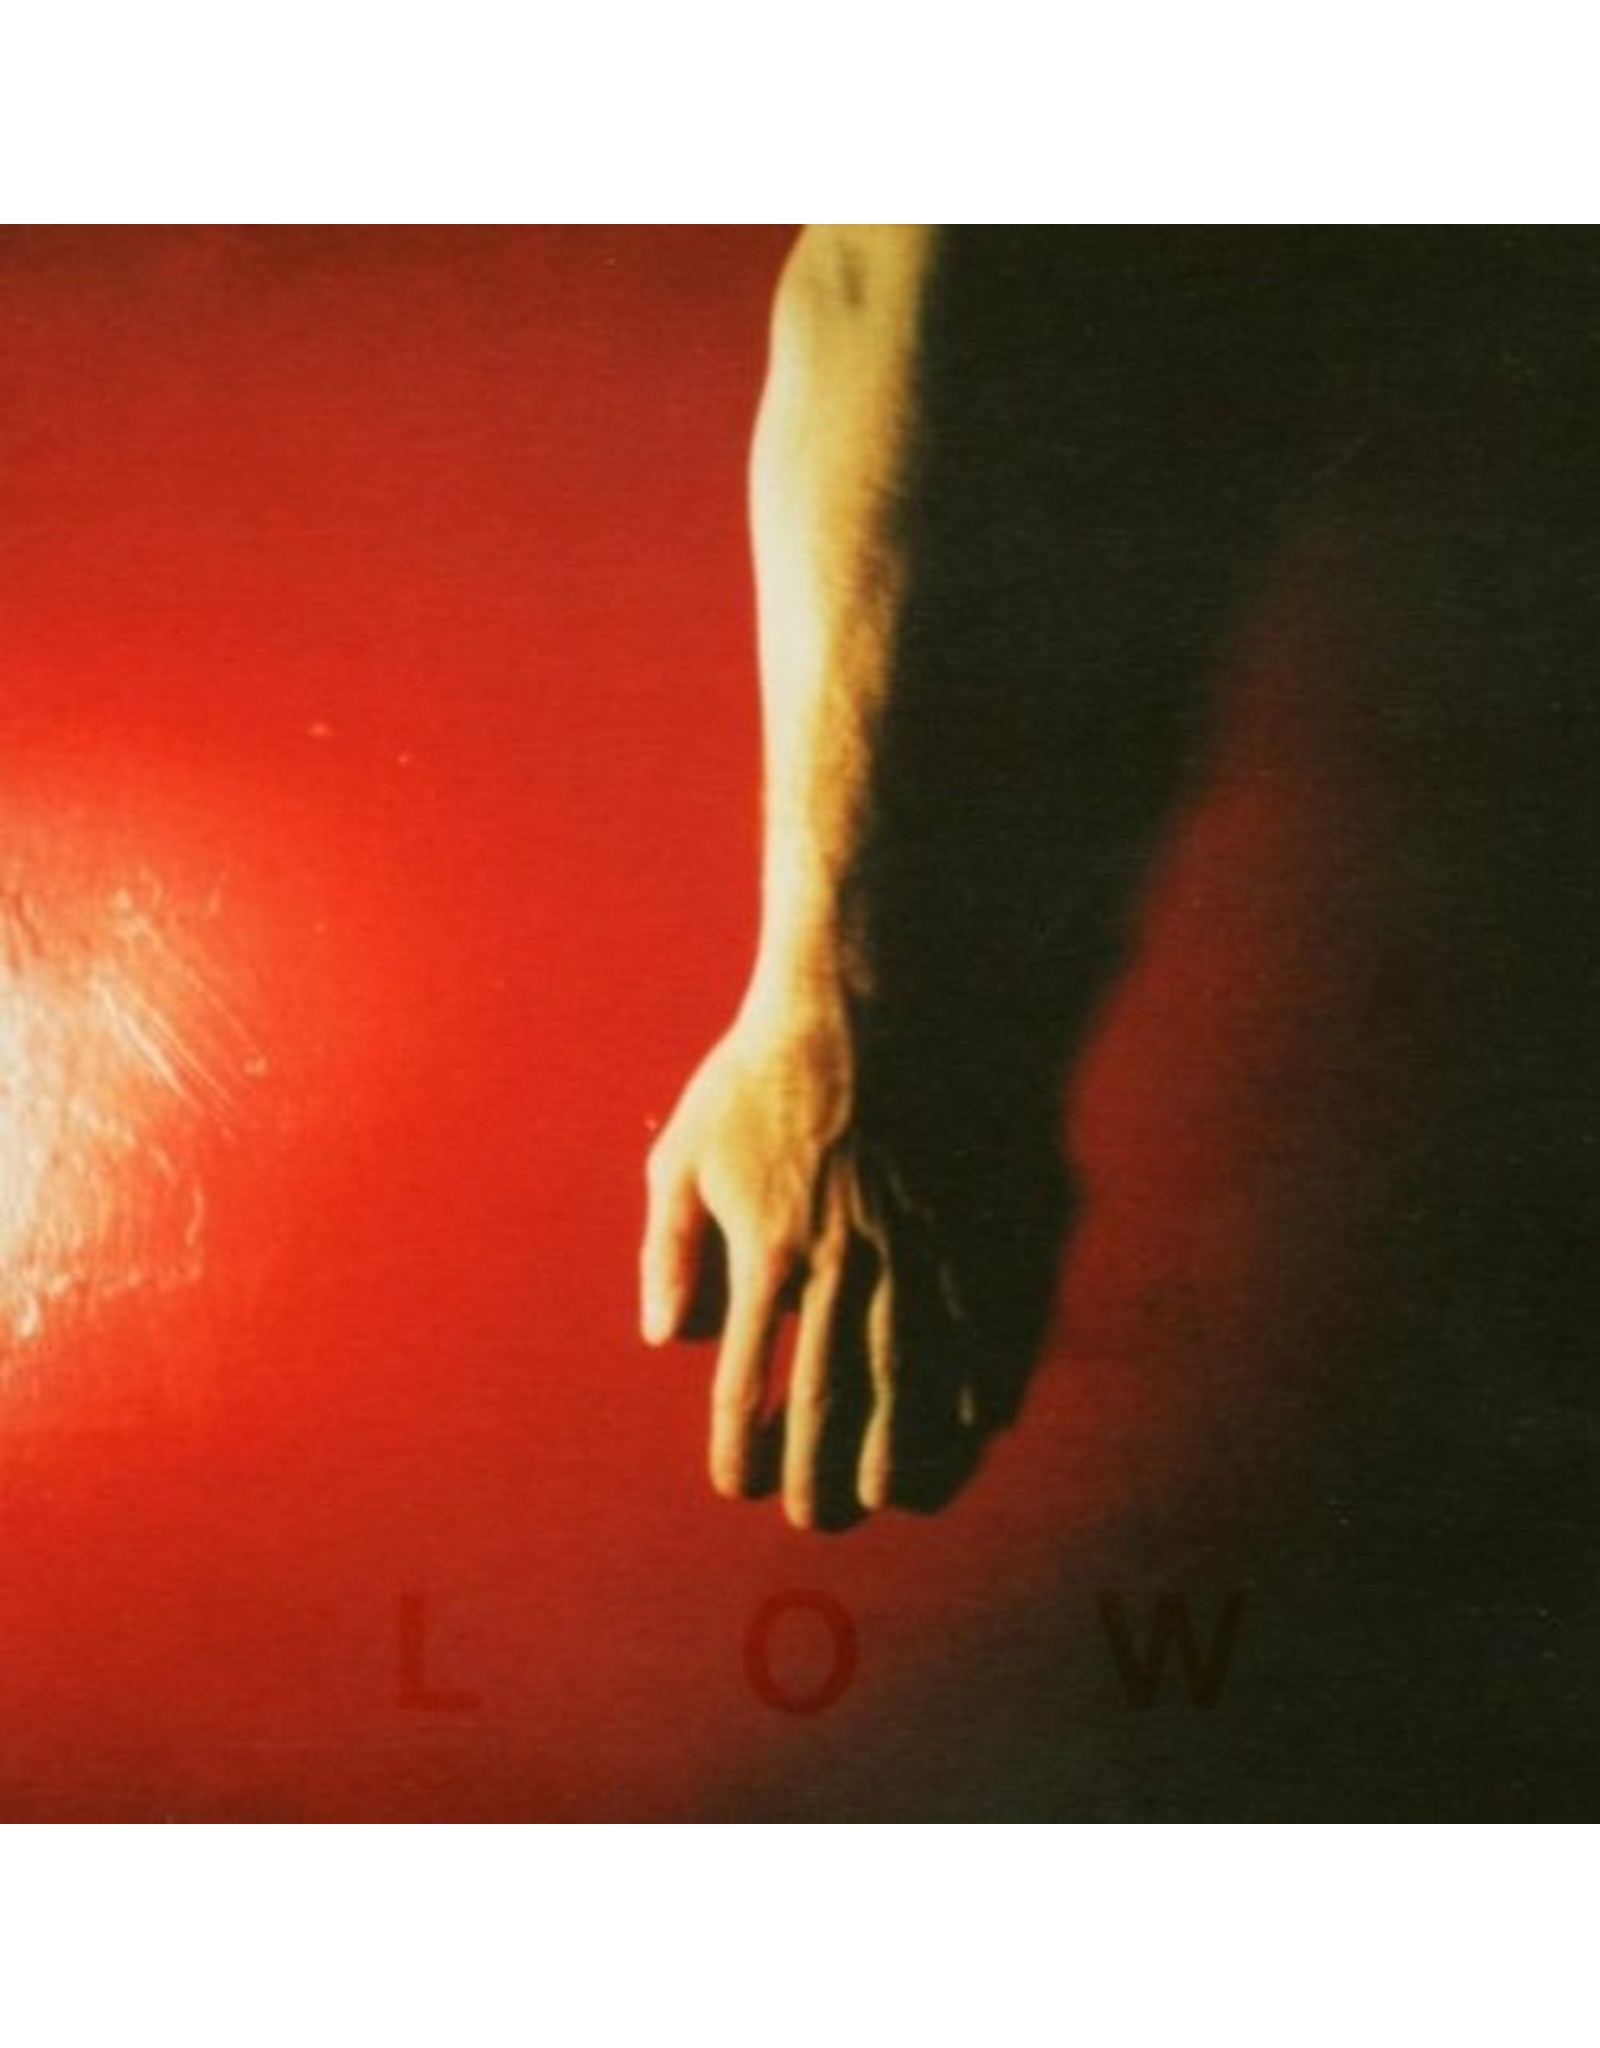 Kranky Low: Trust LP